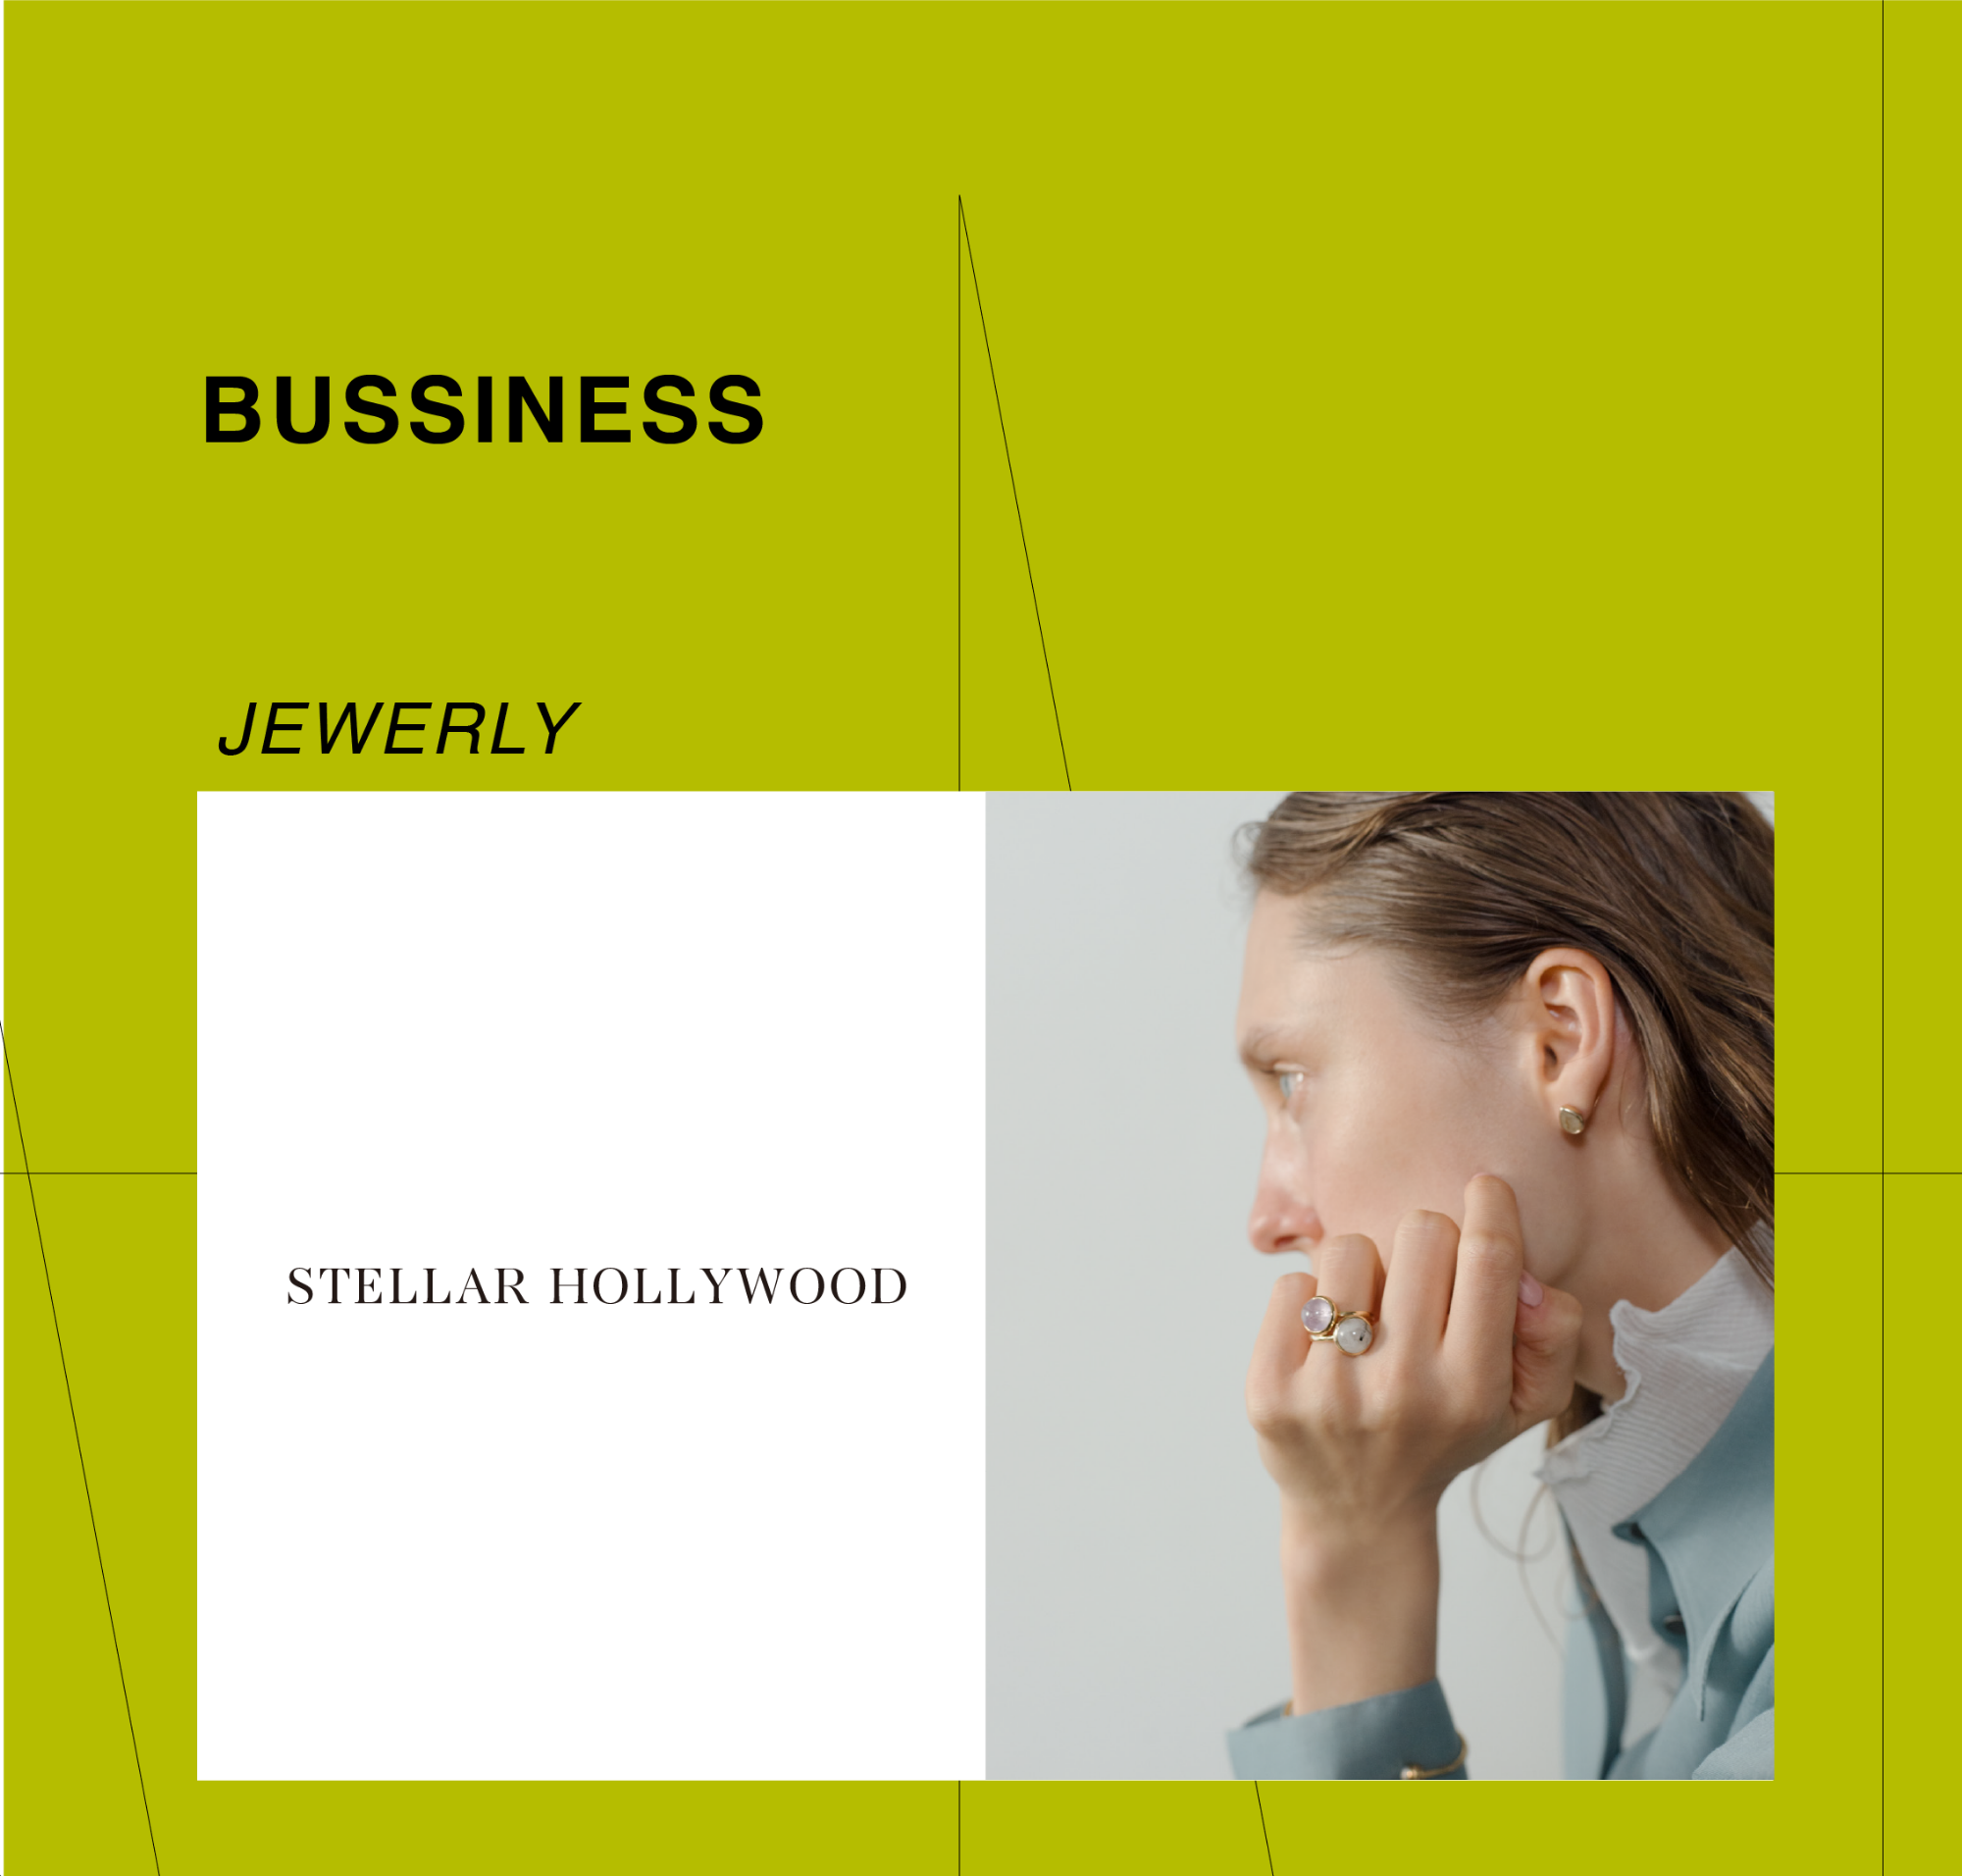 BUSINESSES - JEWELRY (STELLAR HOLLYWOOD)